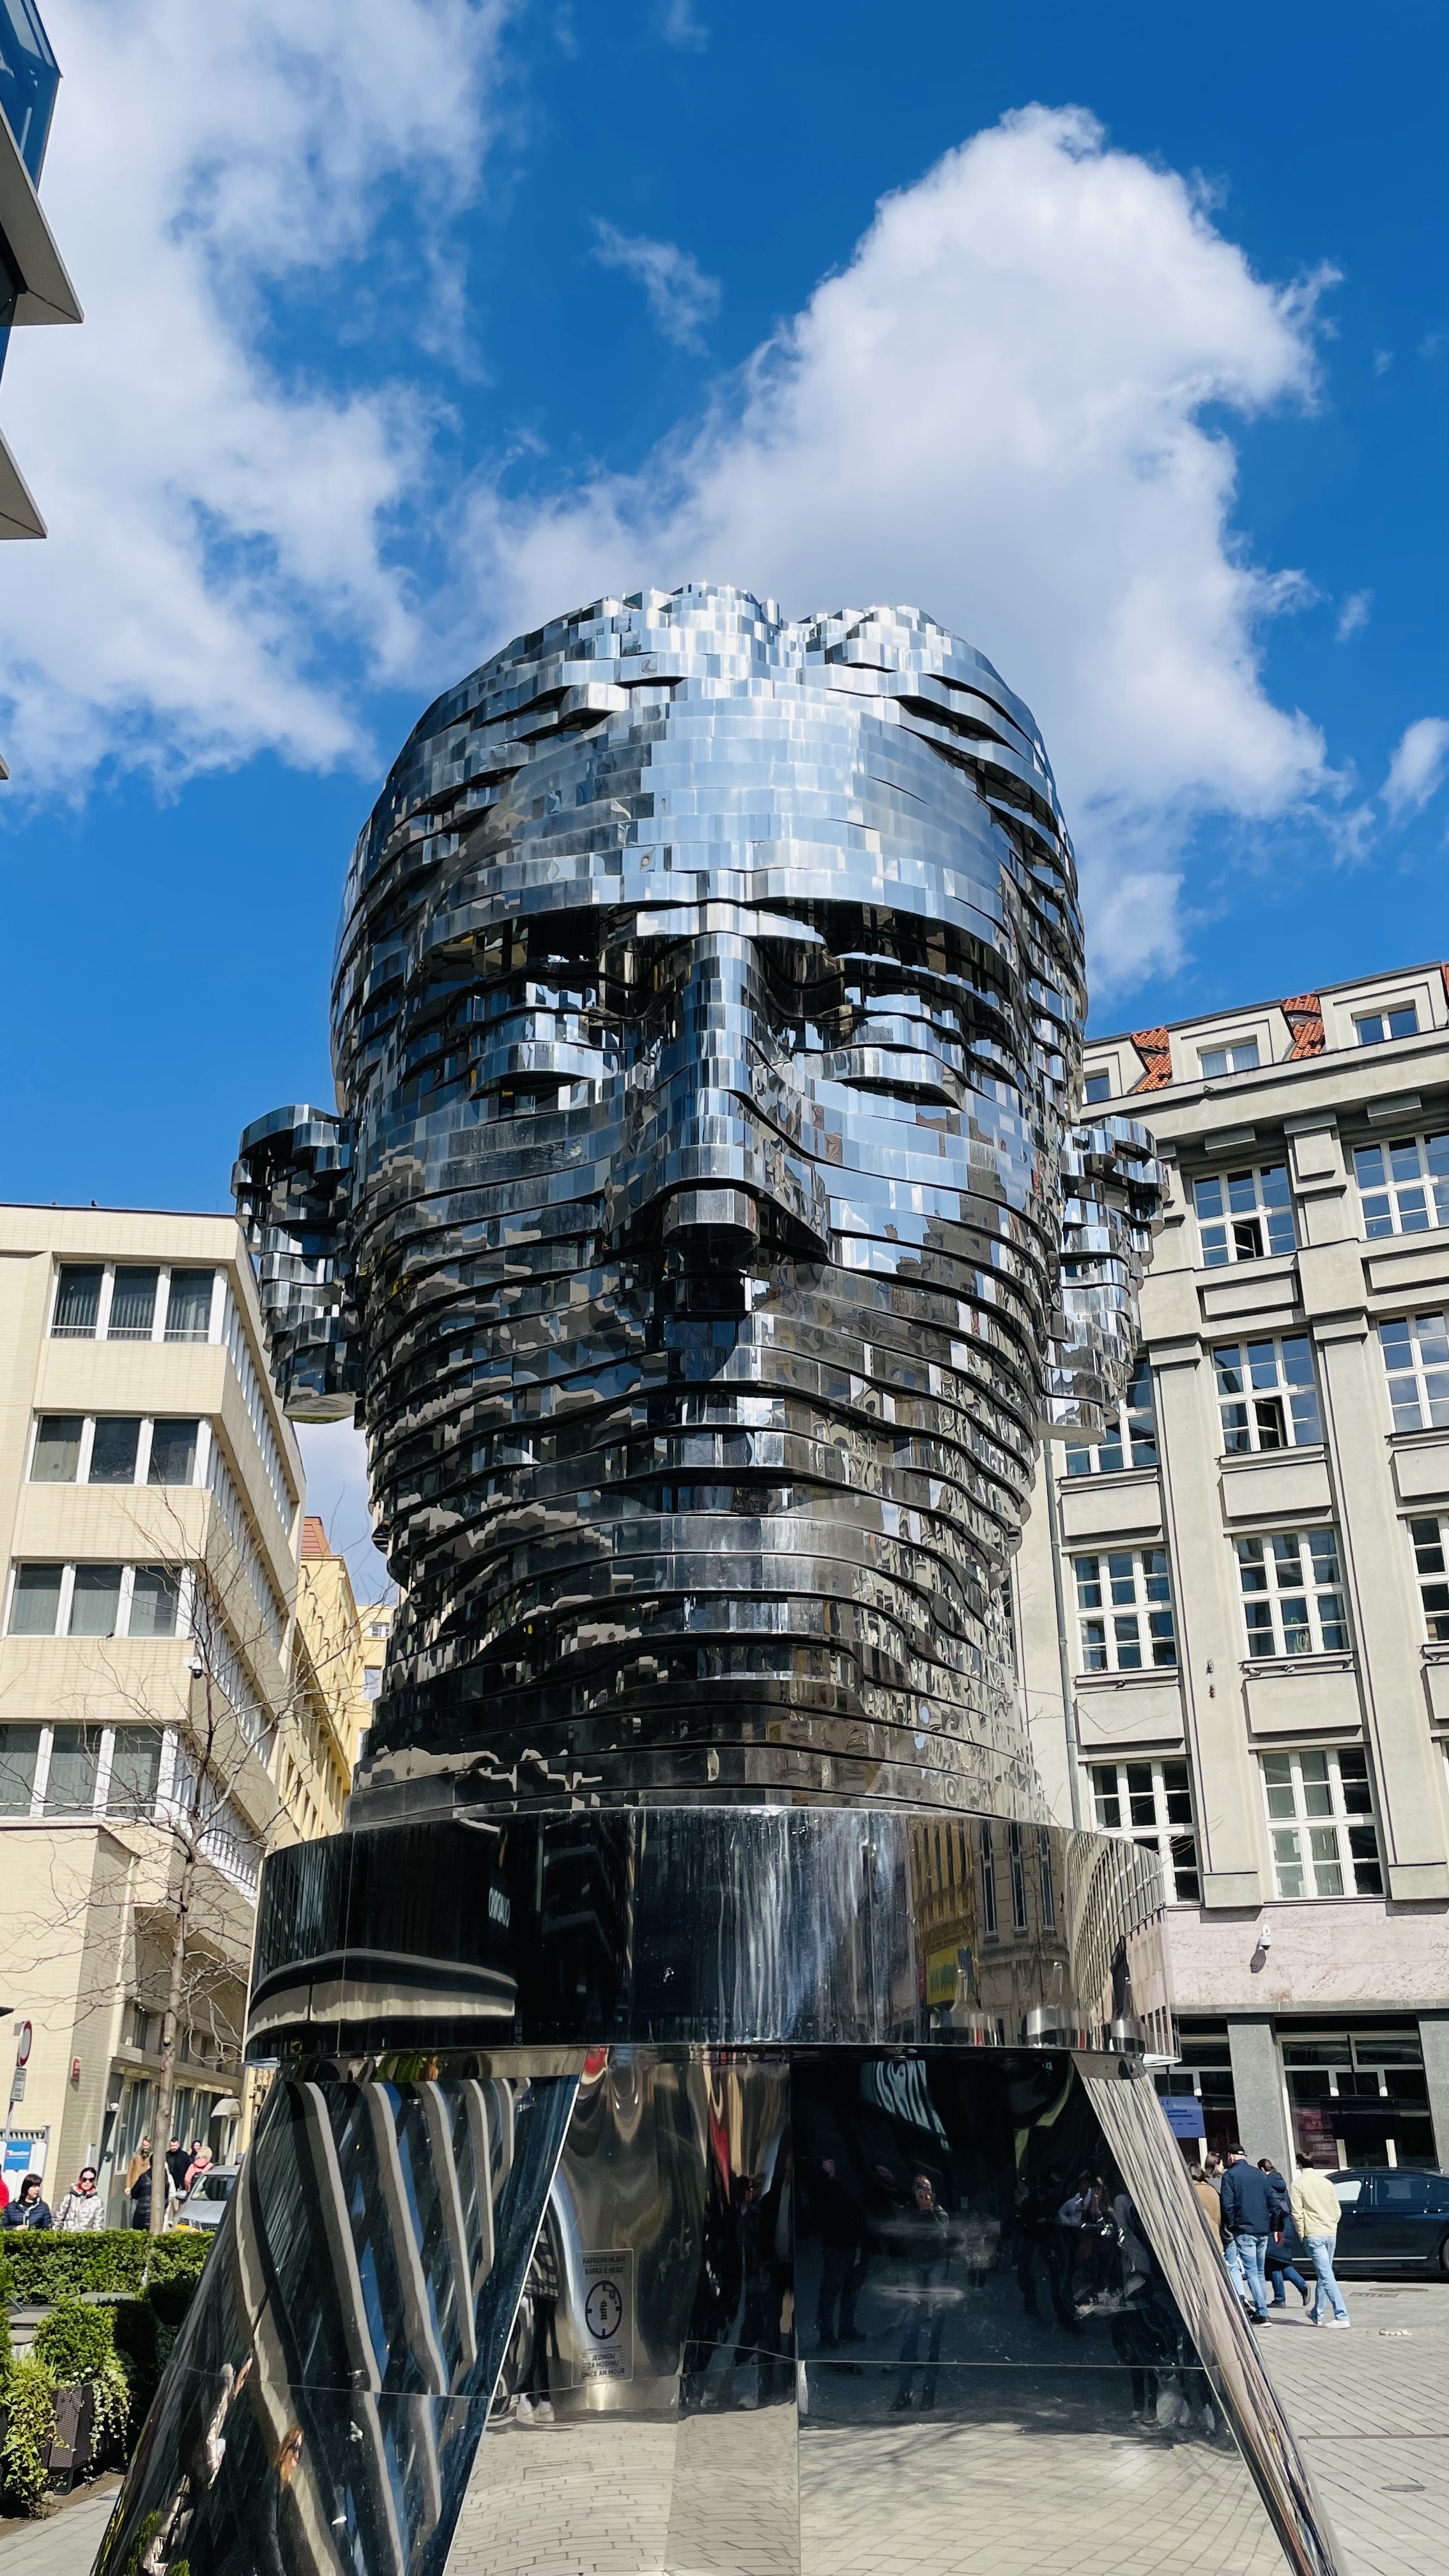 Franz Kafka - Rotating Head by Cerny (Copia)